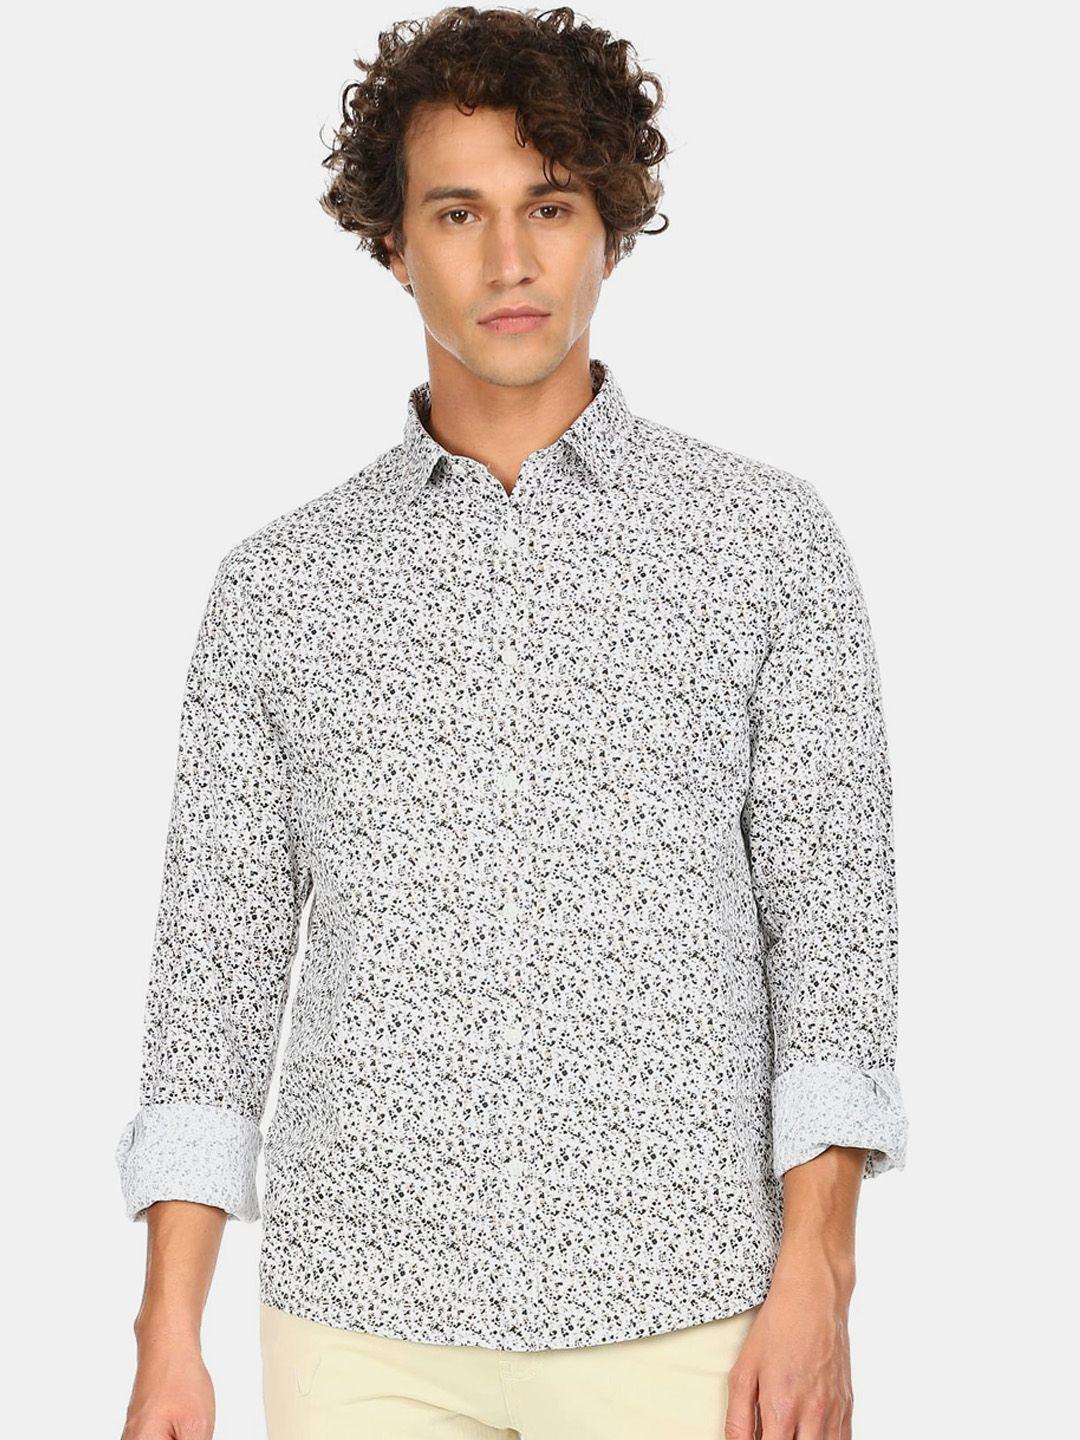 ruggers men brown & white printed cotton casual shirt